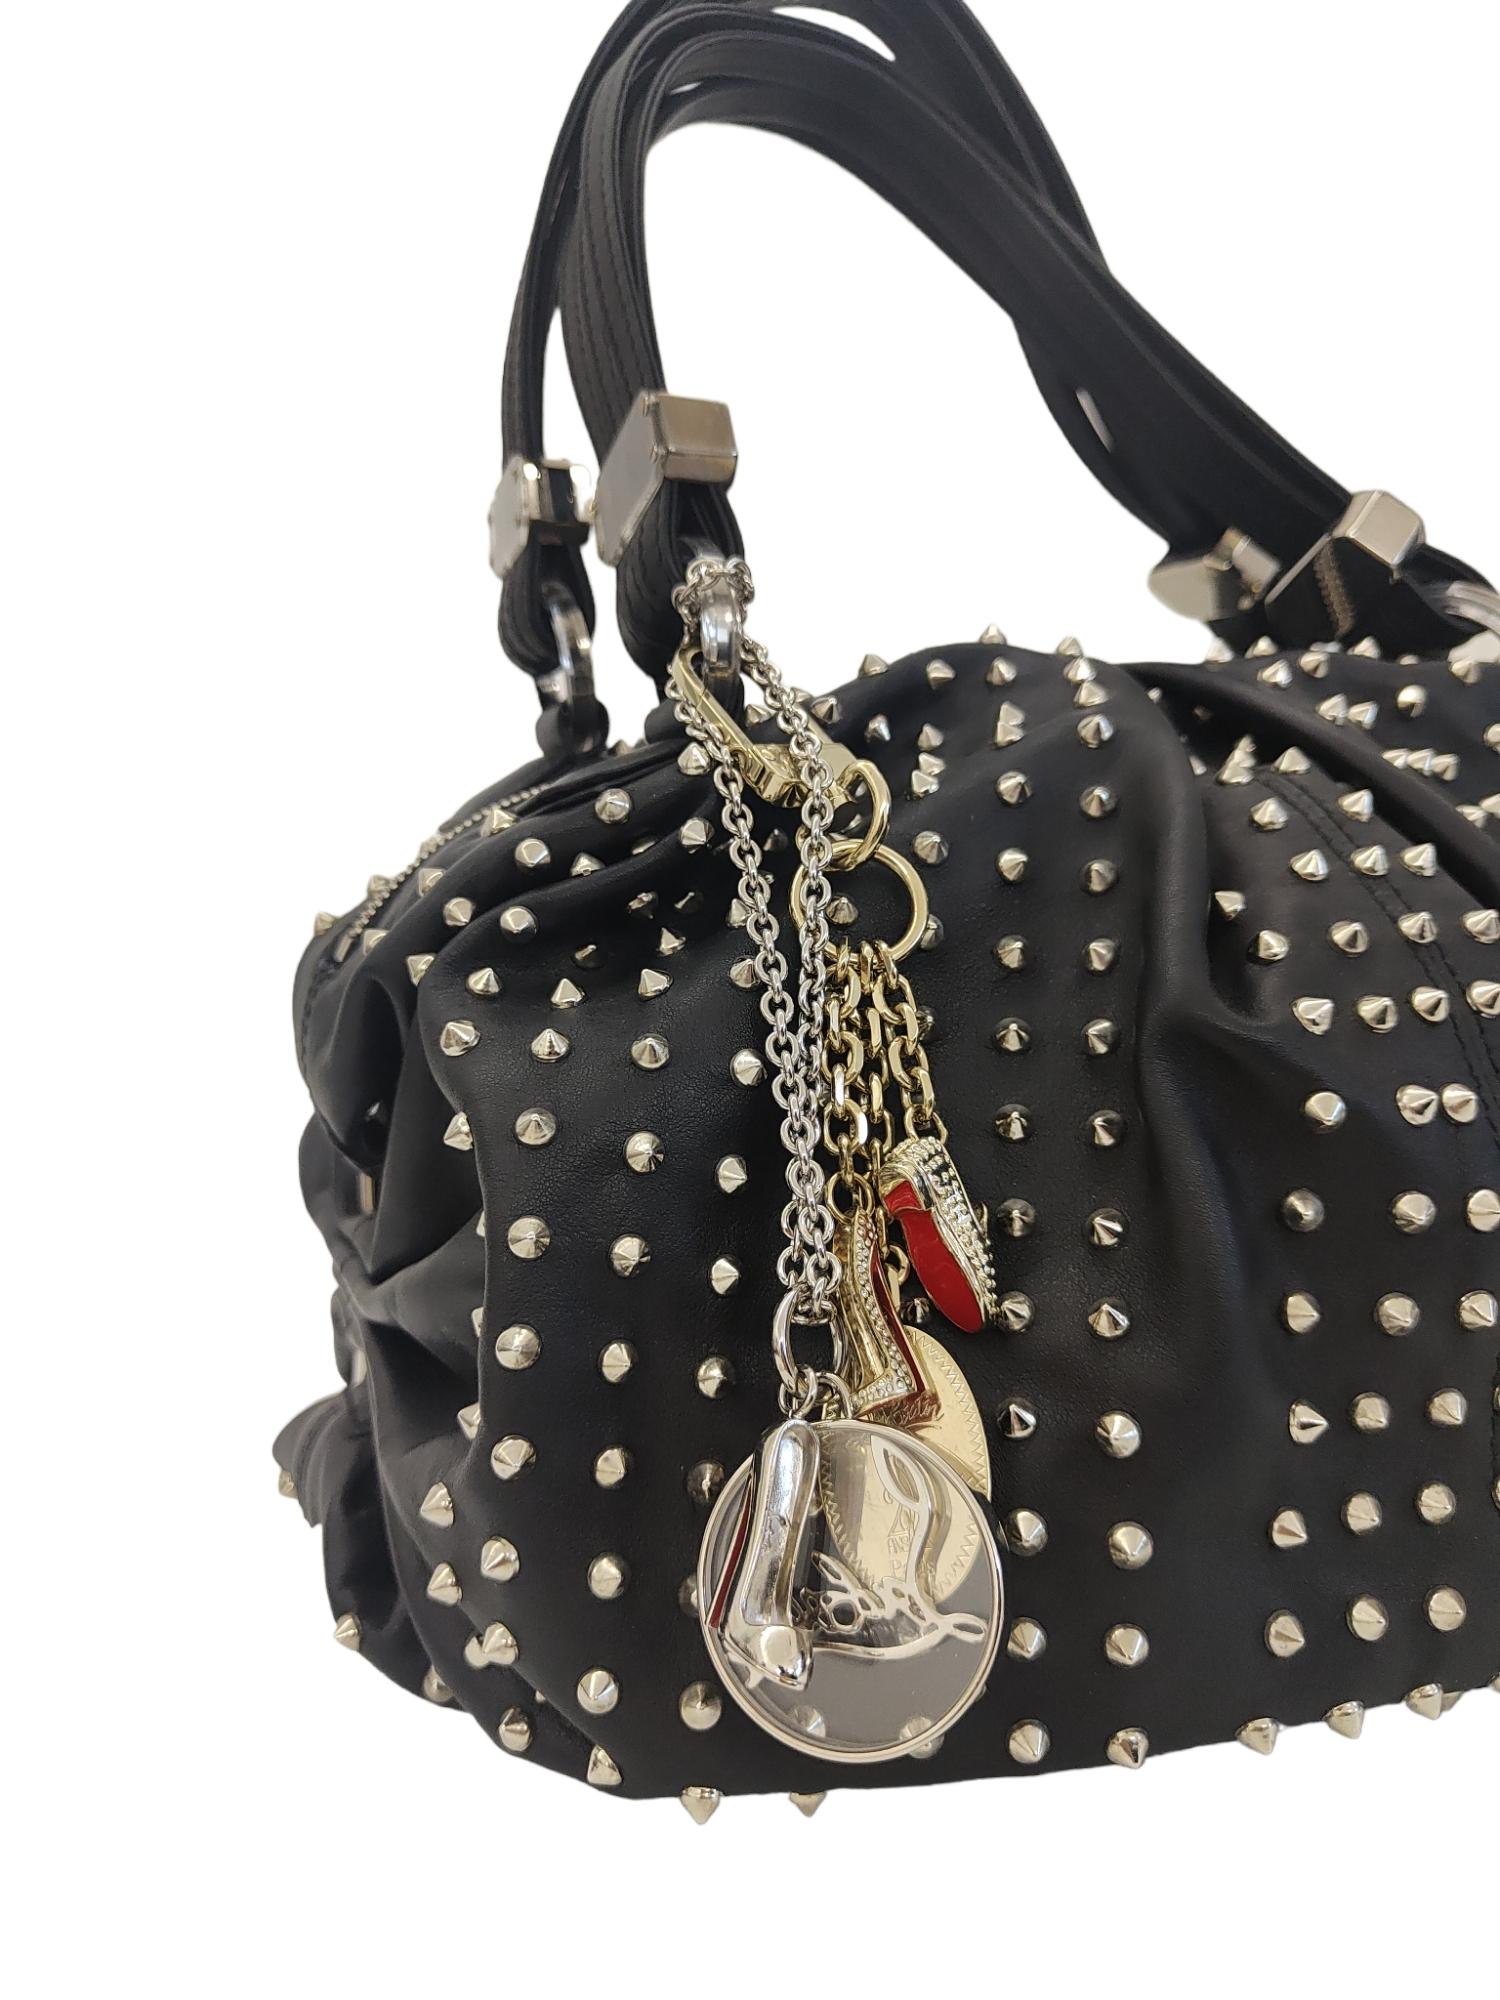 Christian Loboutin black leather silver studs handbag
measurements_ 36*20 cm